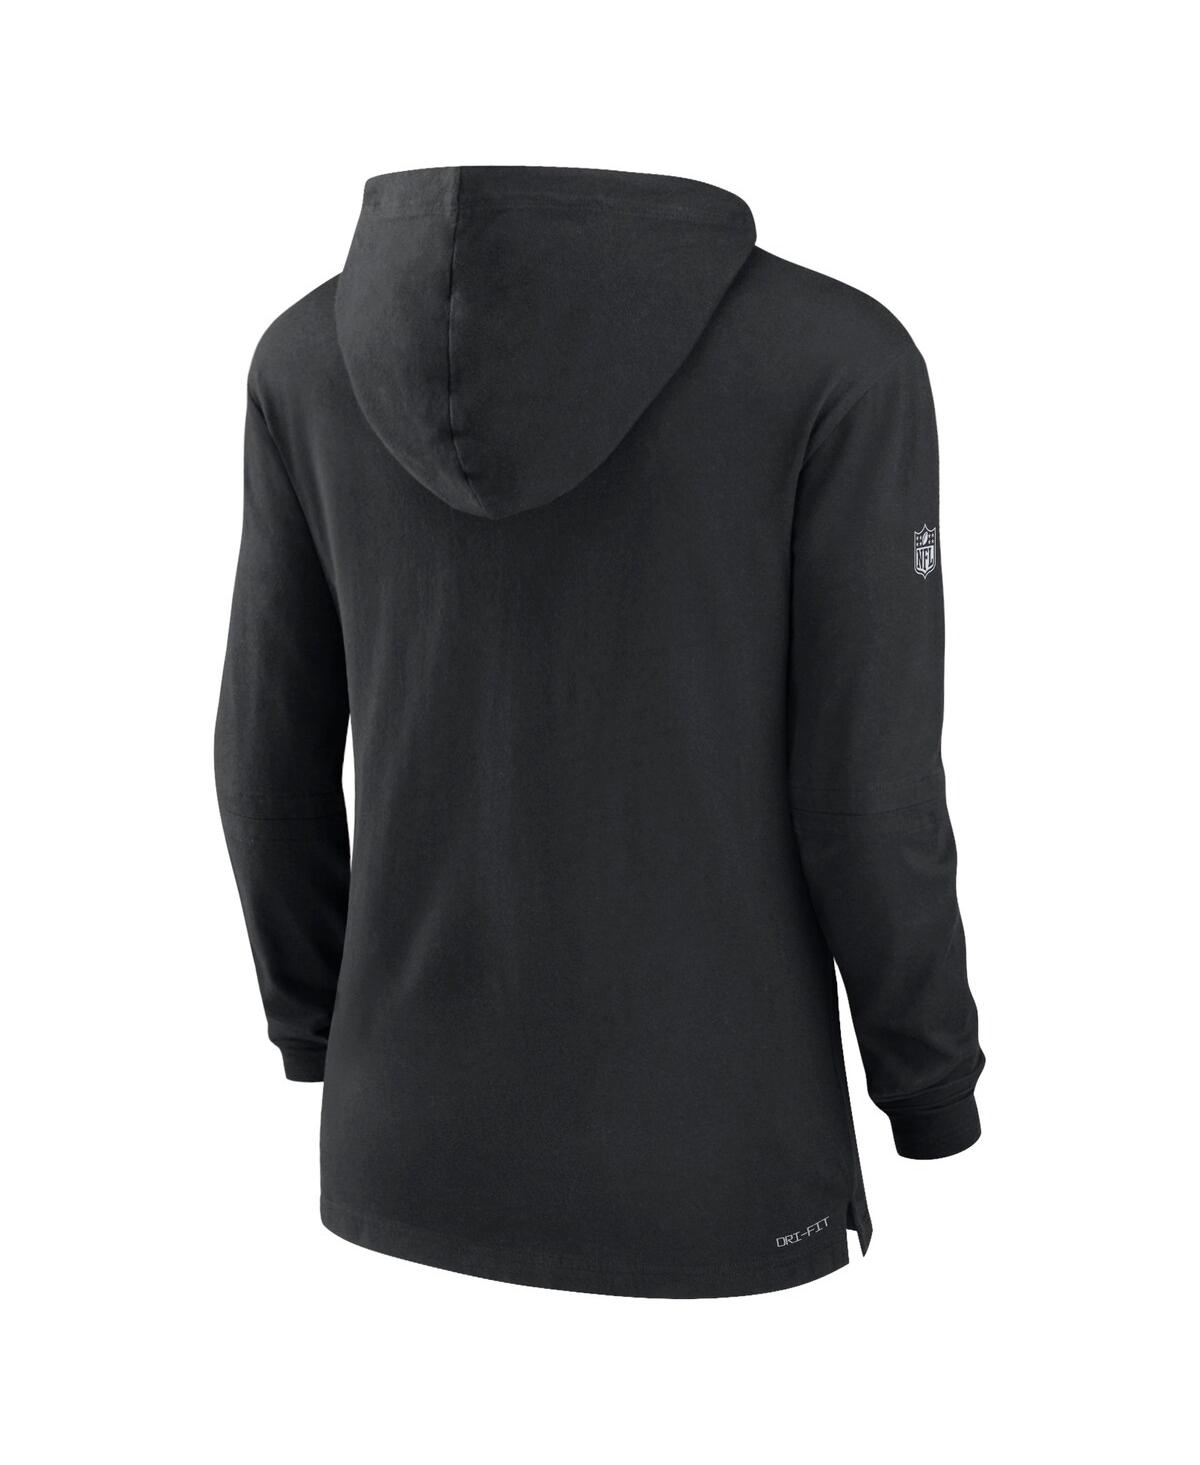 Shop Nike Women's  Black Philadelphia Eagles Sideline Performance Long Sleeve Hoodie T-shirt